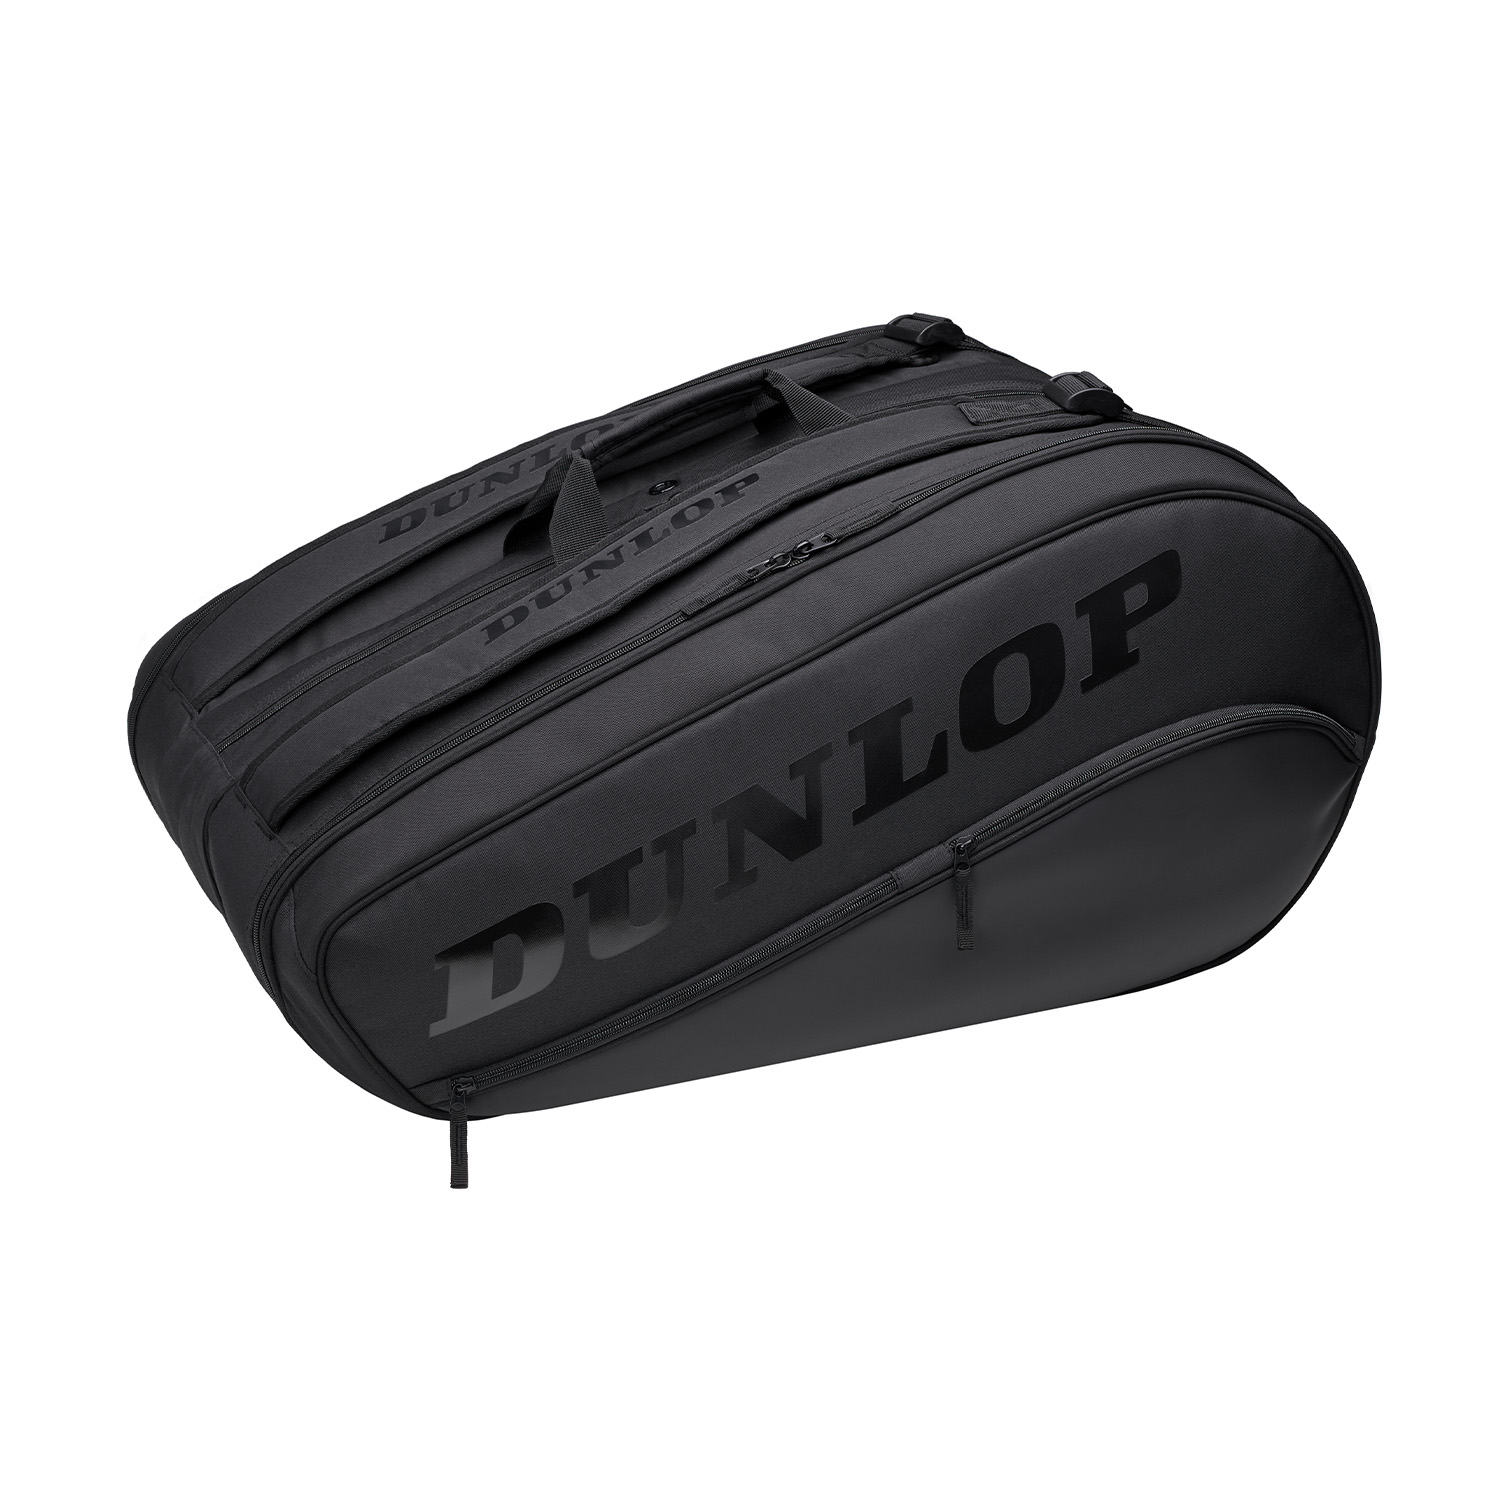 Dunlop Team X 12 Thermo Bolsas - Black